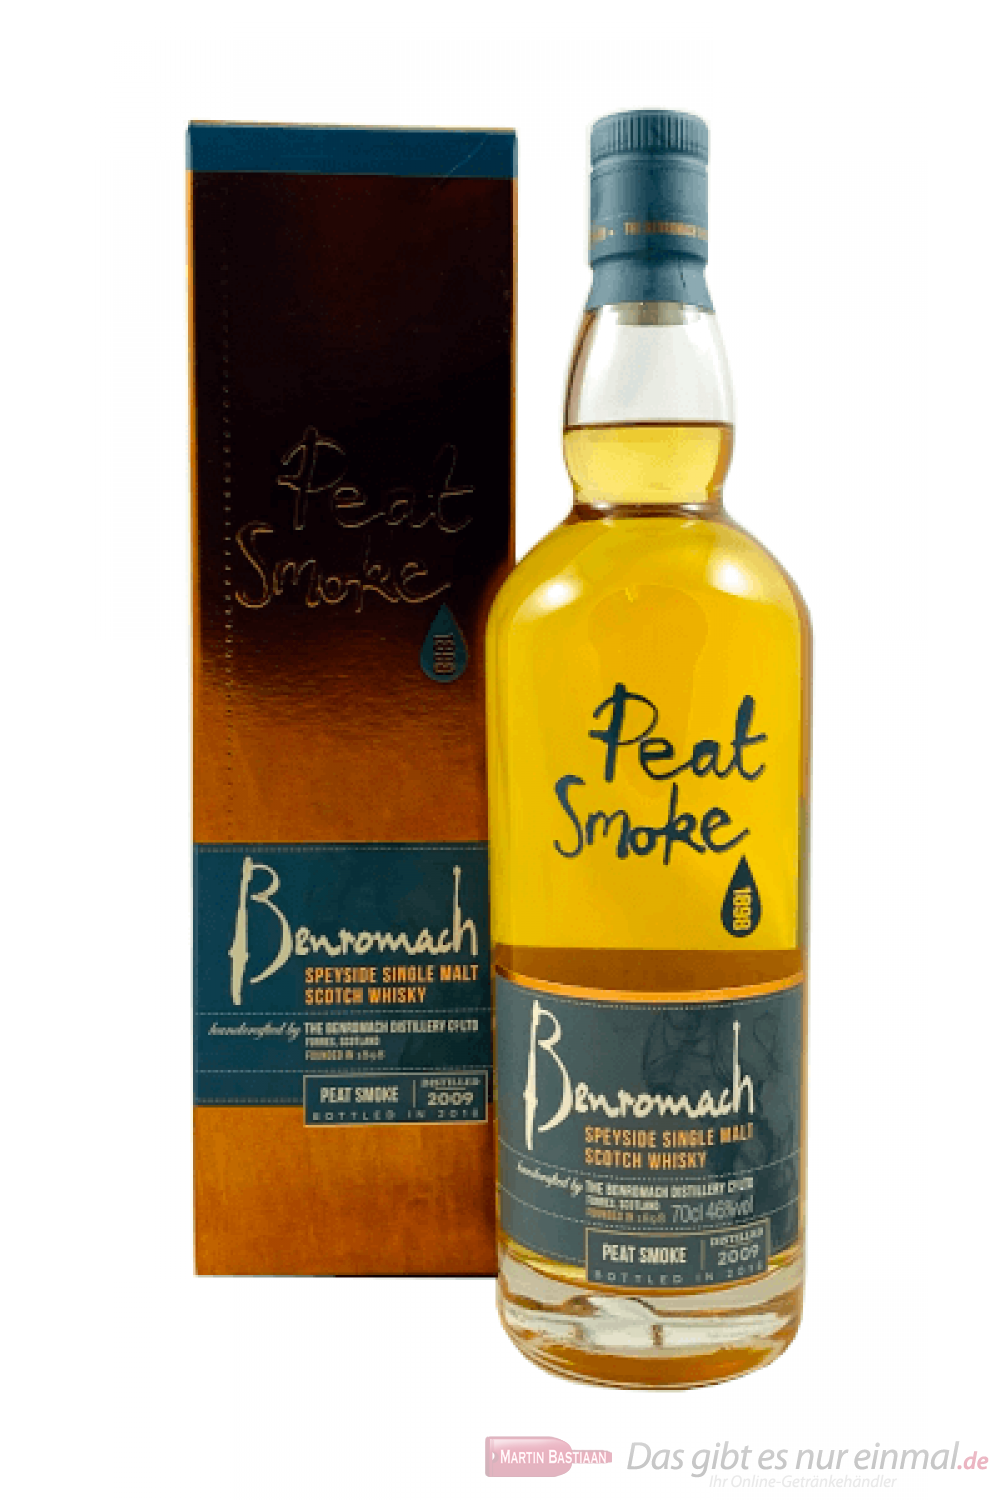 Benromach Peat Smoke Single Malt Scotch Whisky 0,7l 